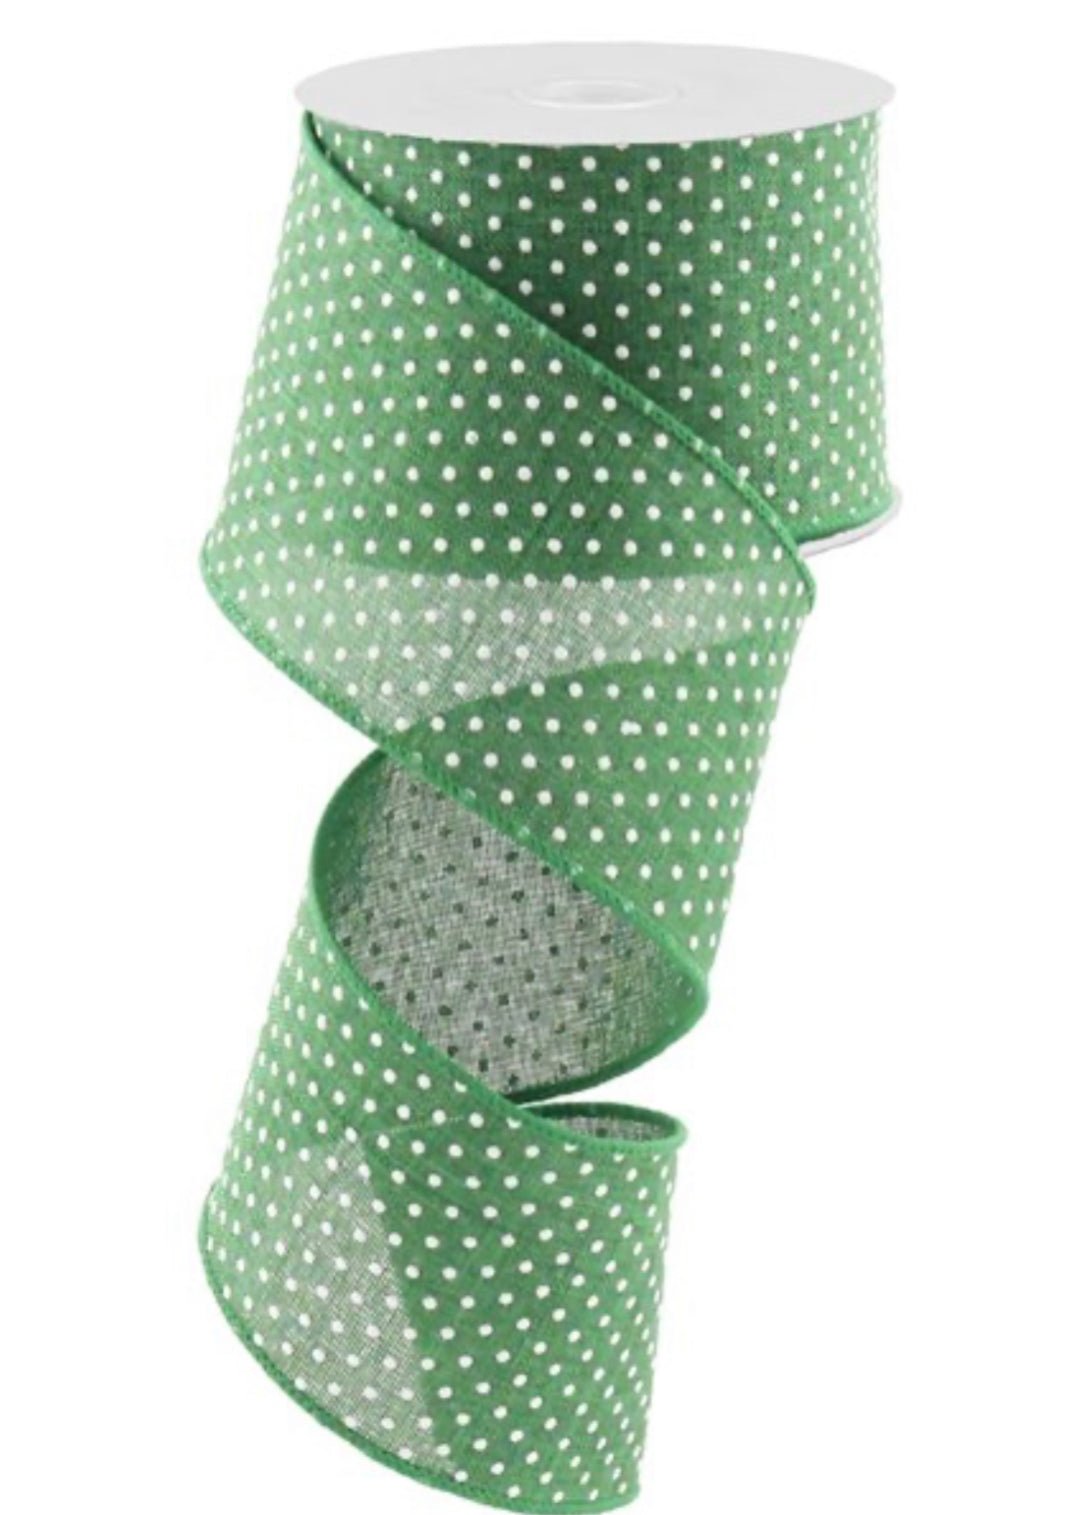 Emerald green and white Swiss dots on royal 2.5” - Greenery MarketWired ribbonRG0165206